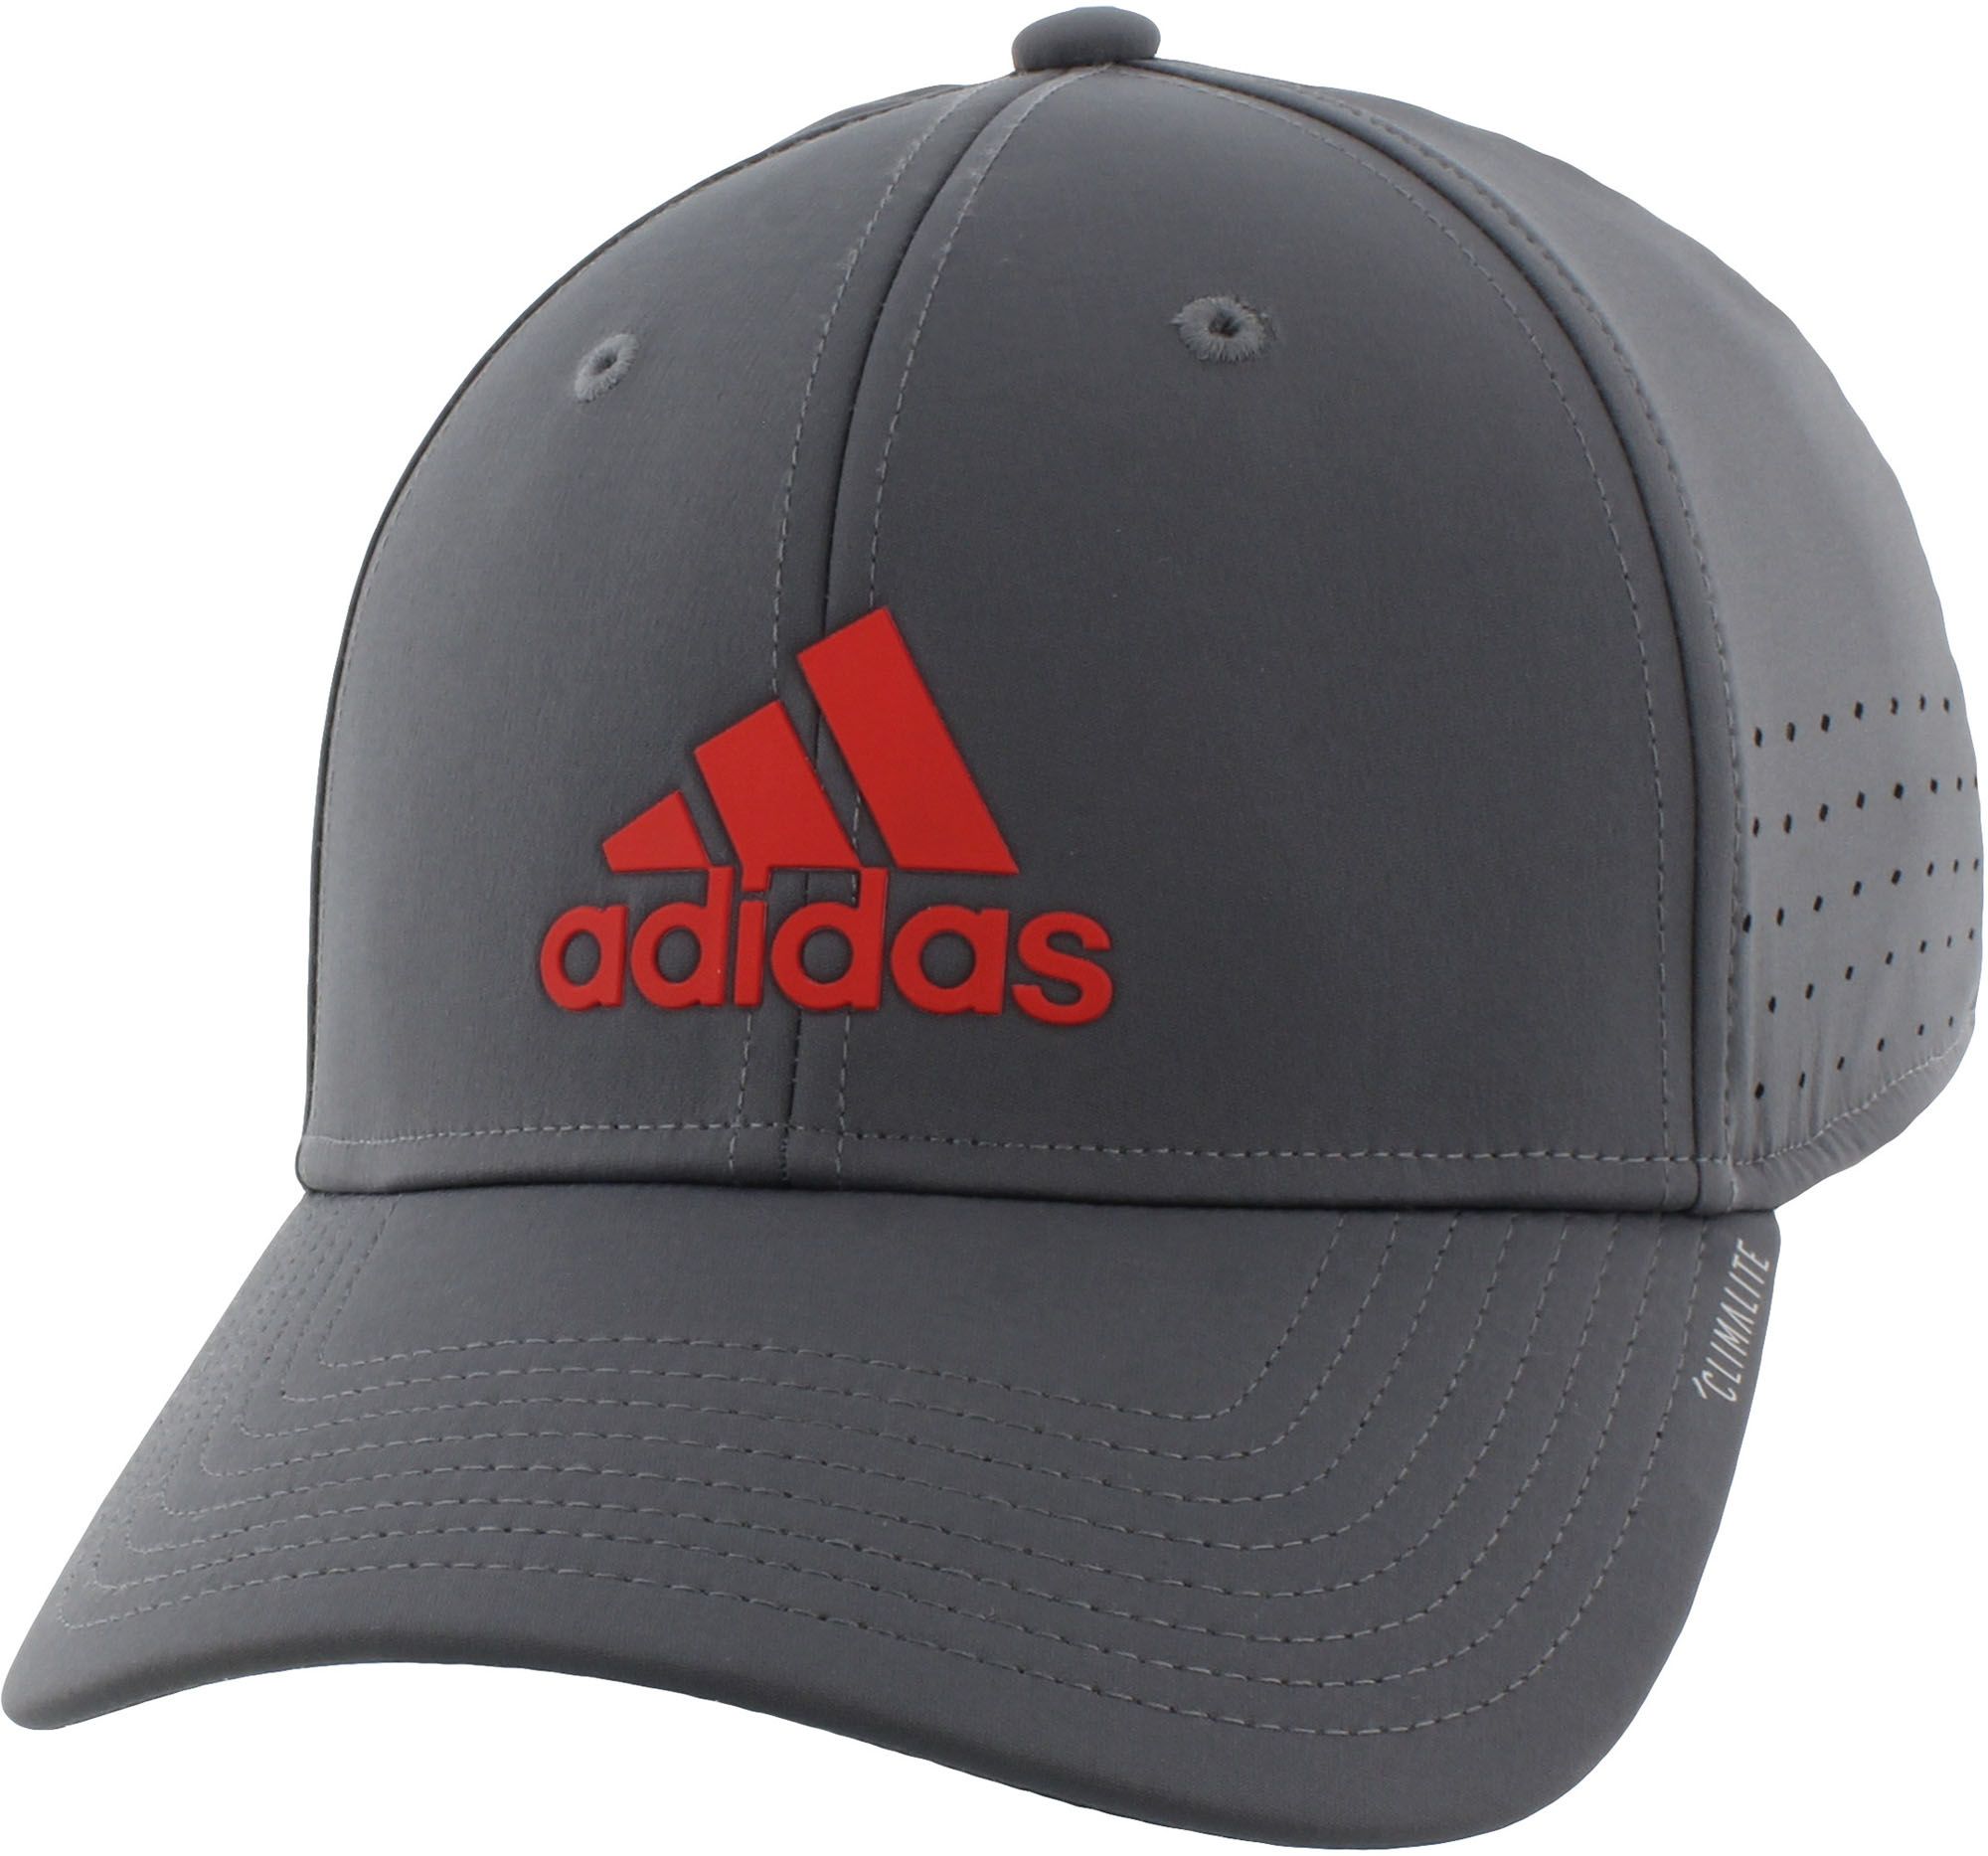 adidas Men's Gameday II Stretch Fit Hat 